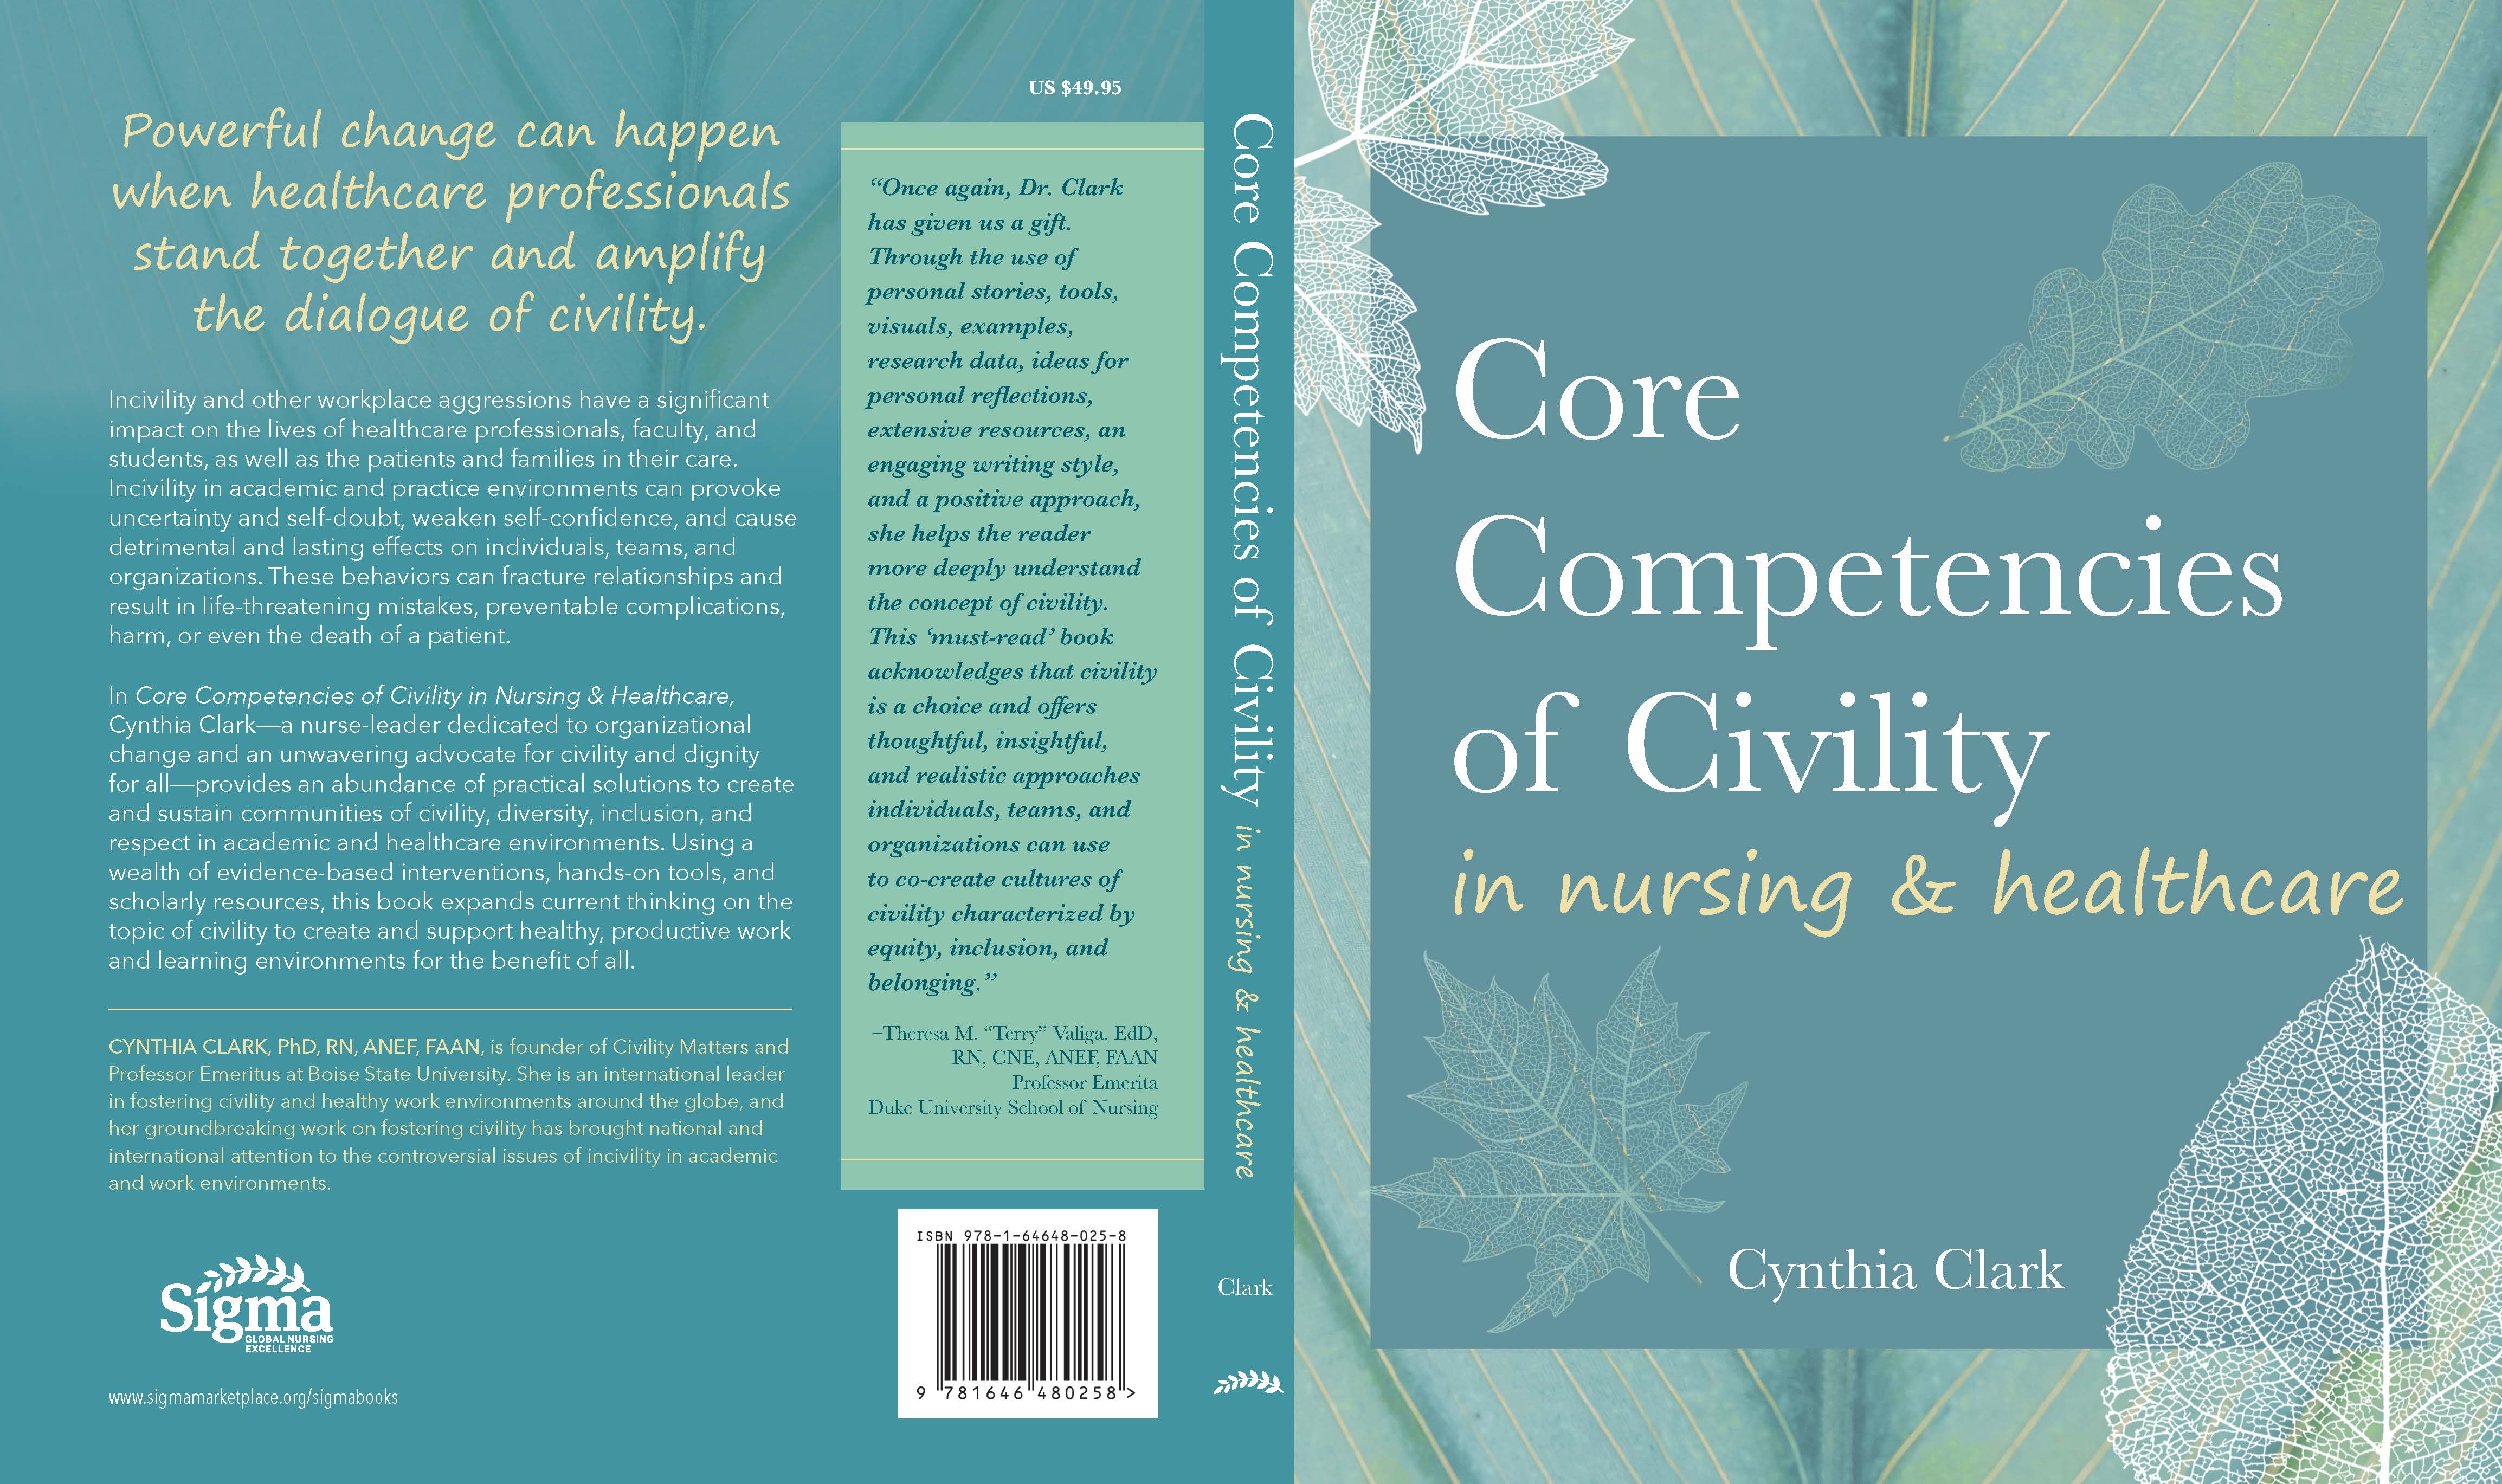 Core competencies of Civility book cover